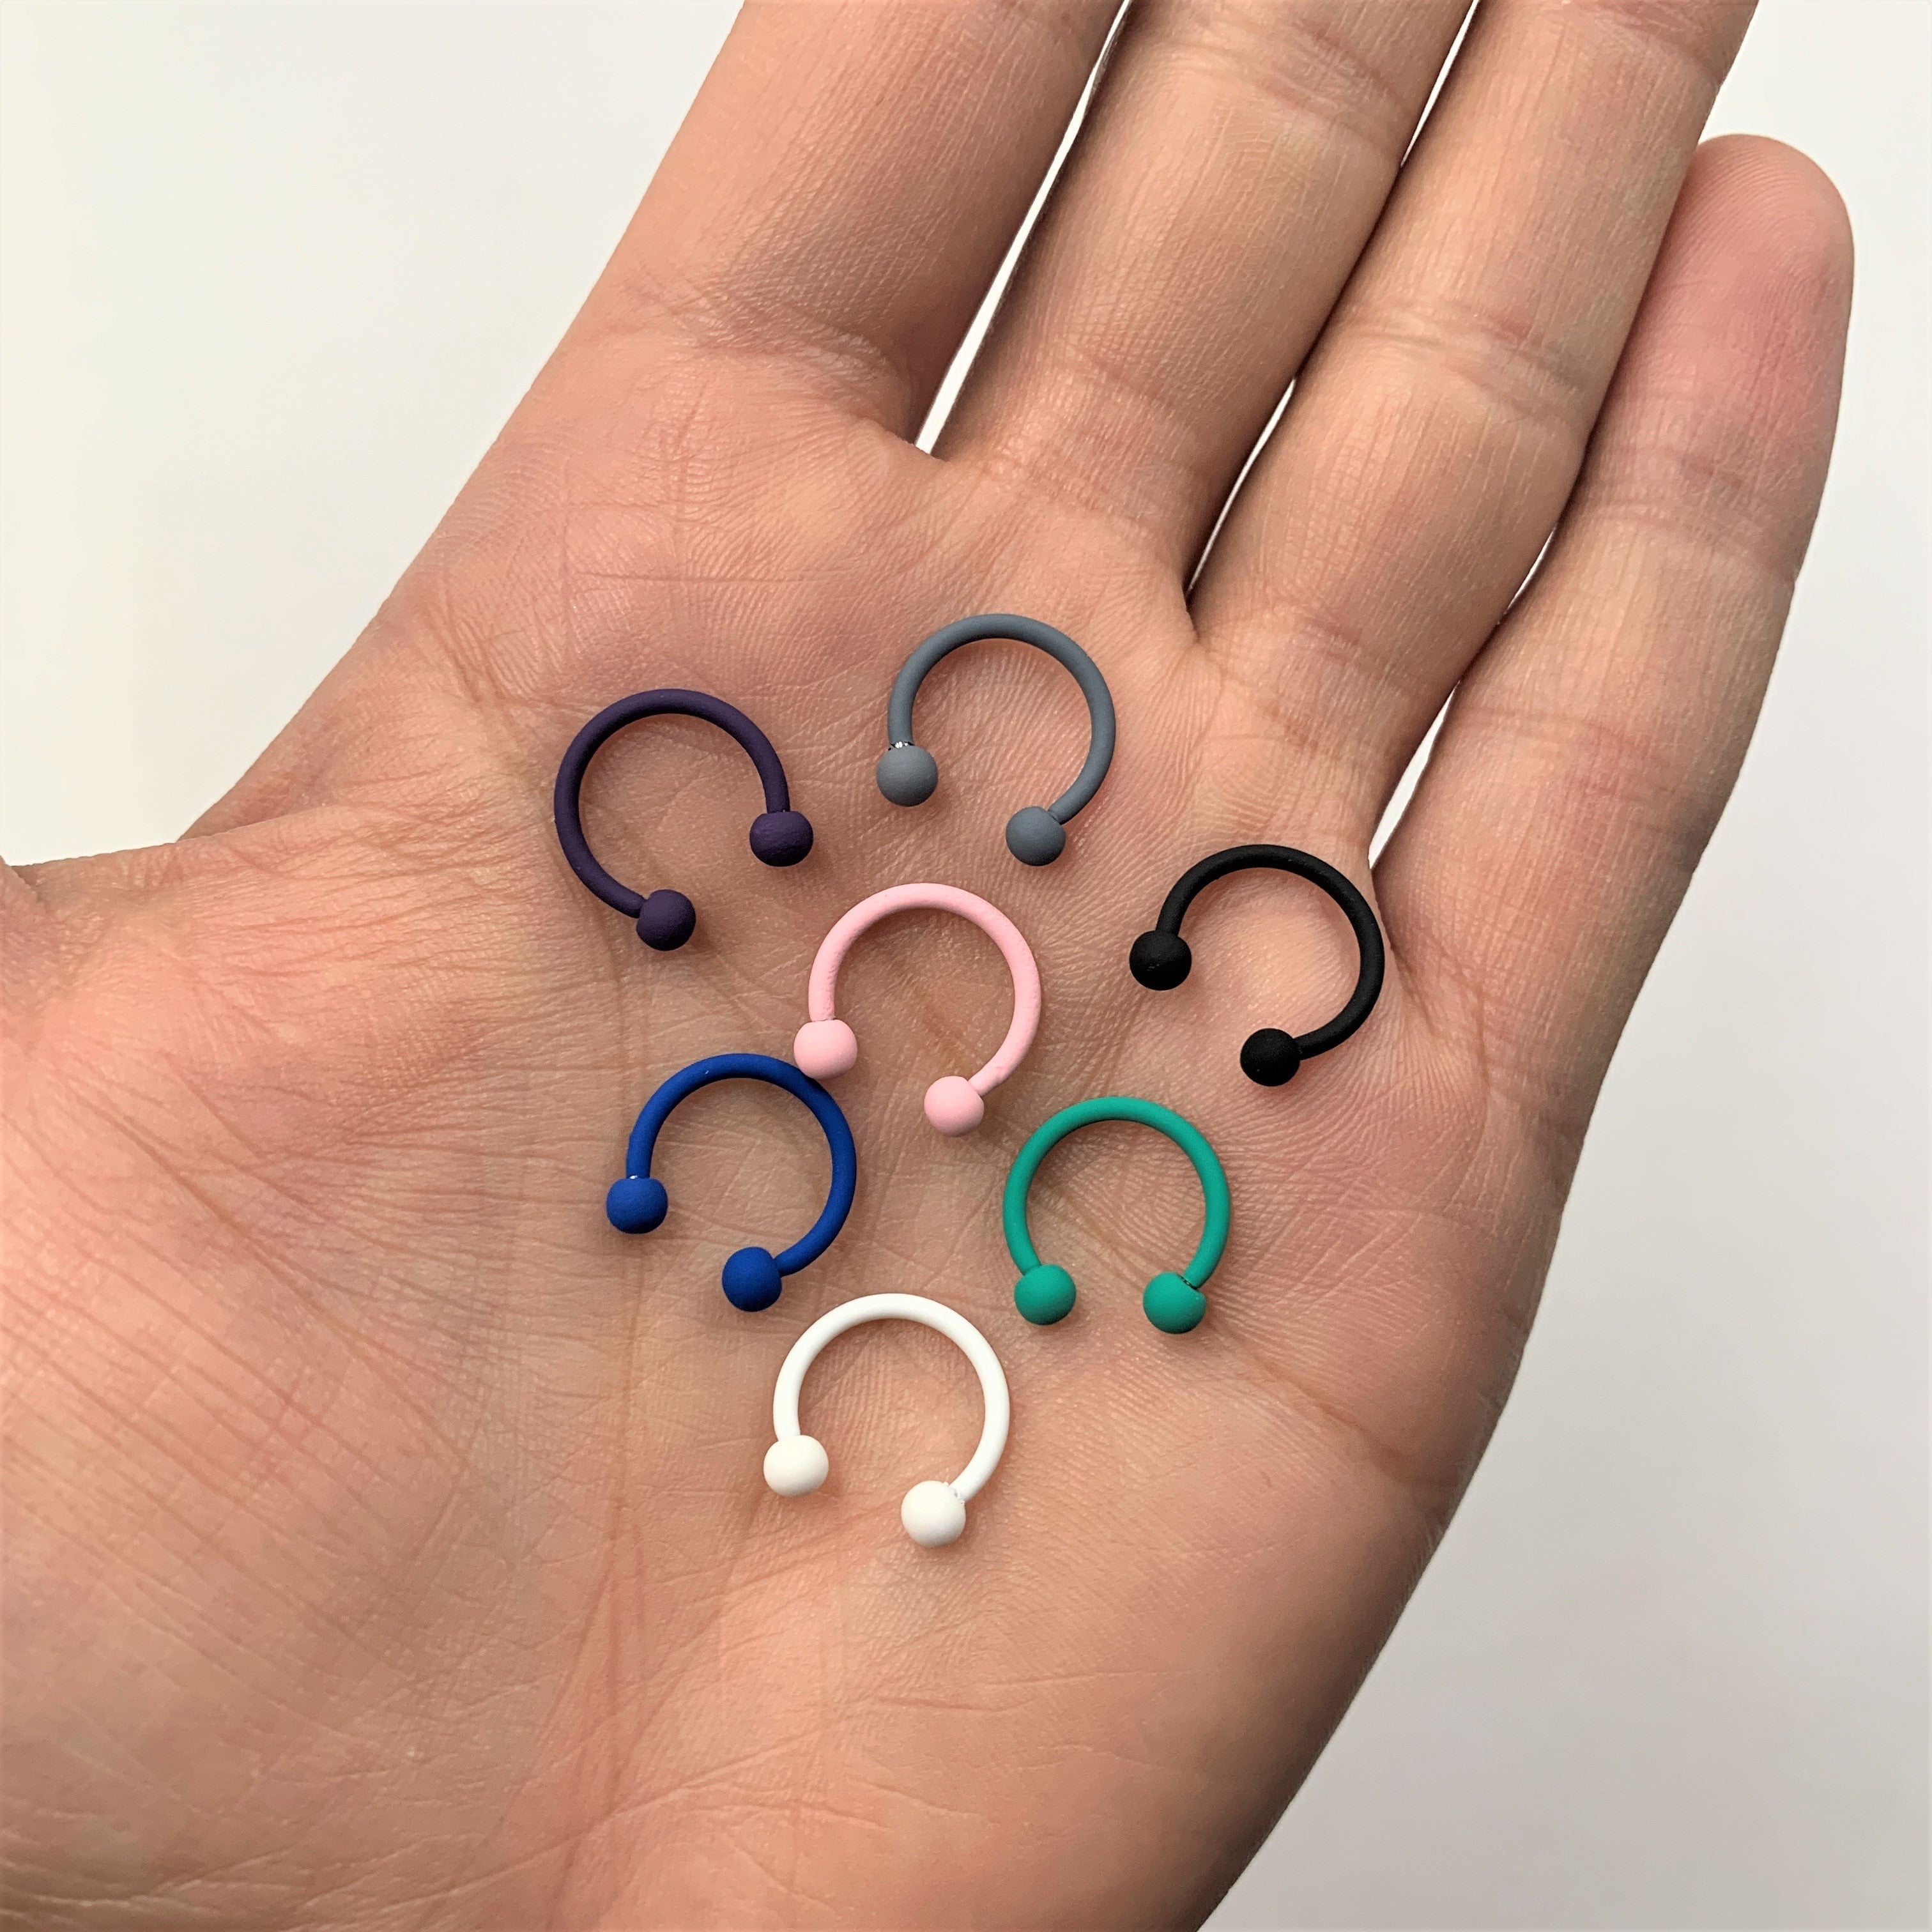 Buy FANSING 16g 8mm Septum Rings for Women Surgical Steel Septum Hoop 3  Rings Hinged Septum Jewelry 16 Gauge Piercing Jewelry Daith Earring at  Amazon.in